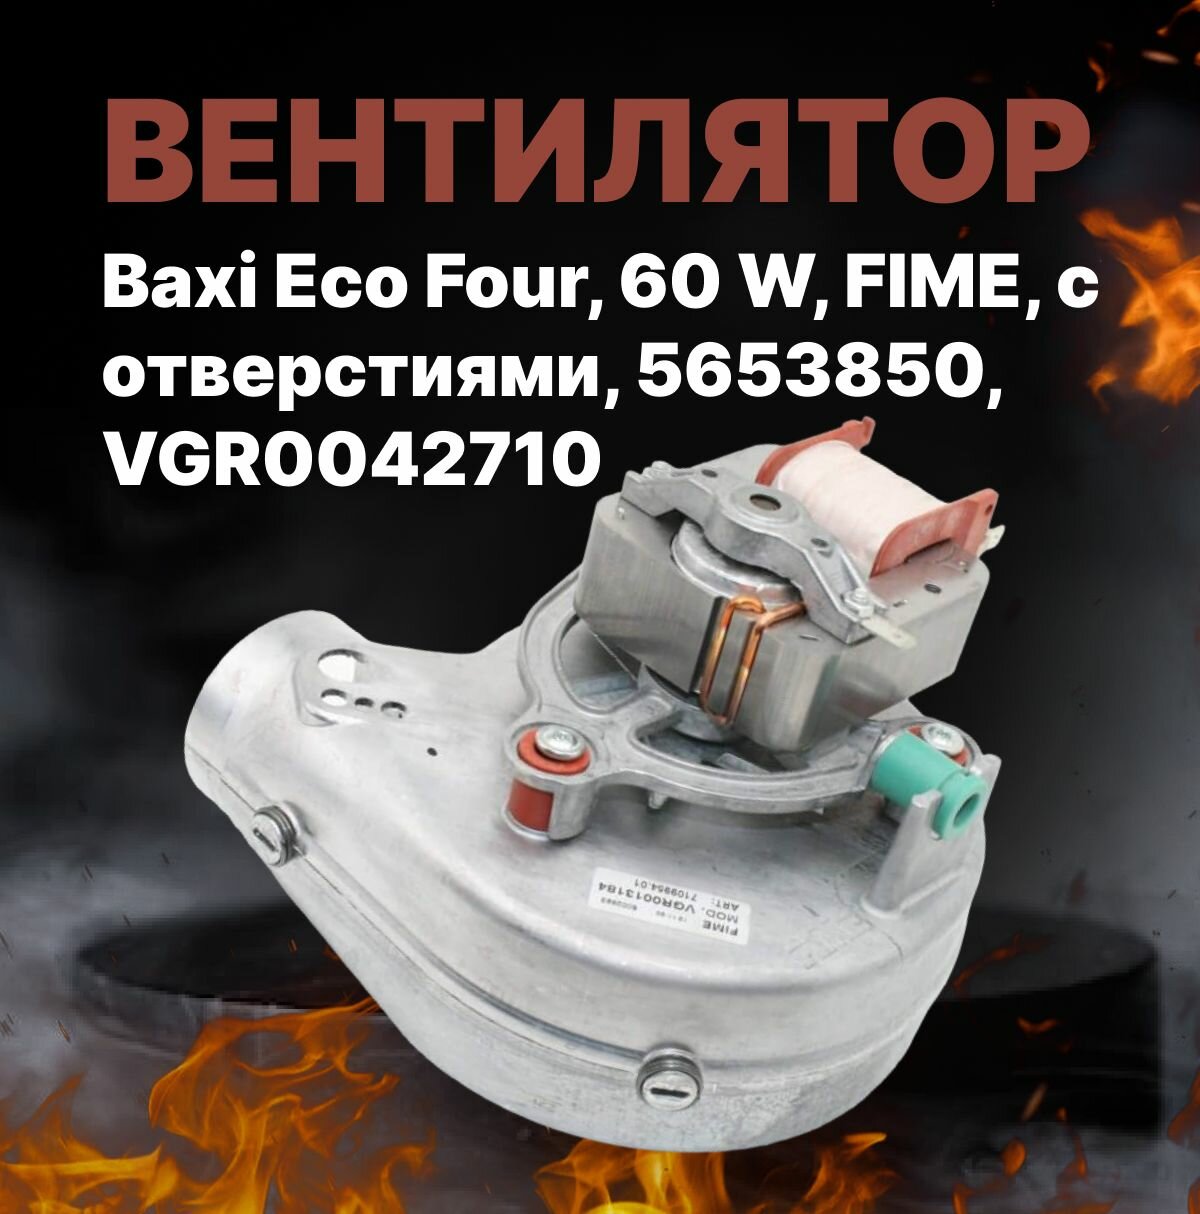 Вентилятор Baxi Eco Four, 60 W, FIME, с отверстиями, 5653850, VGR0042710